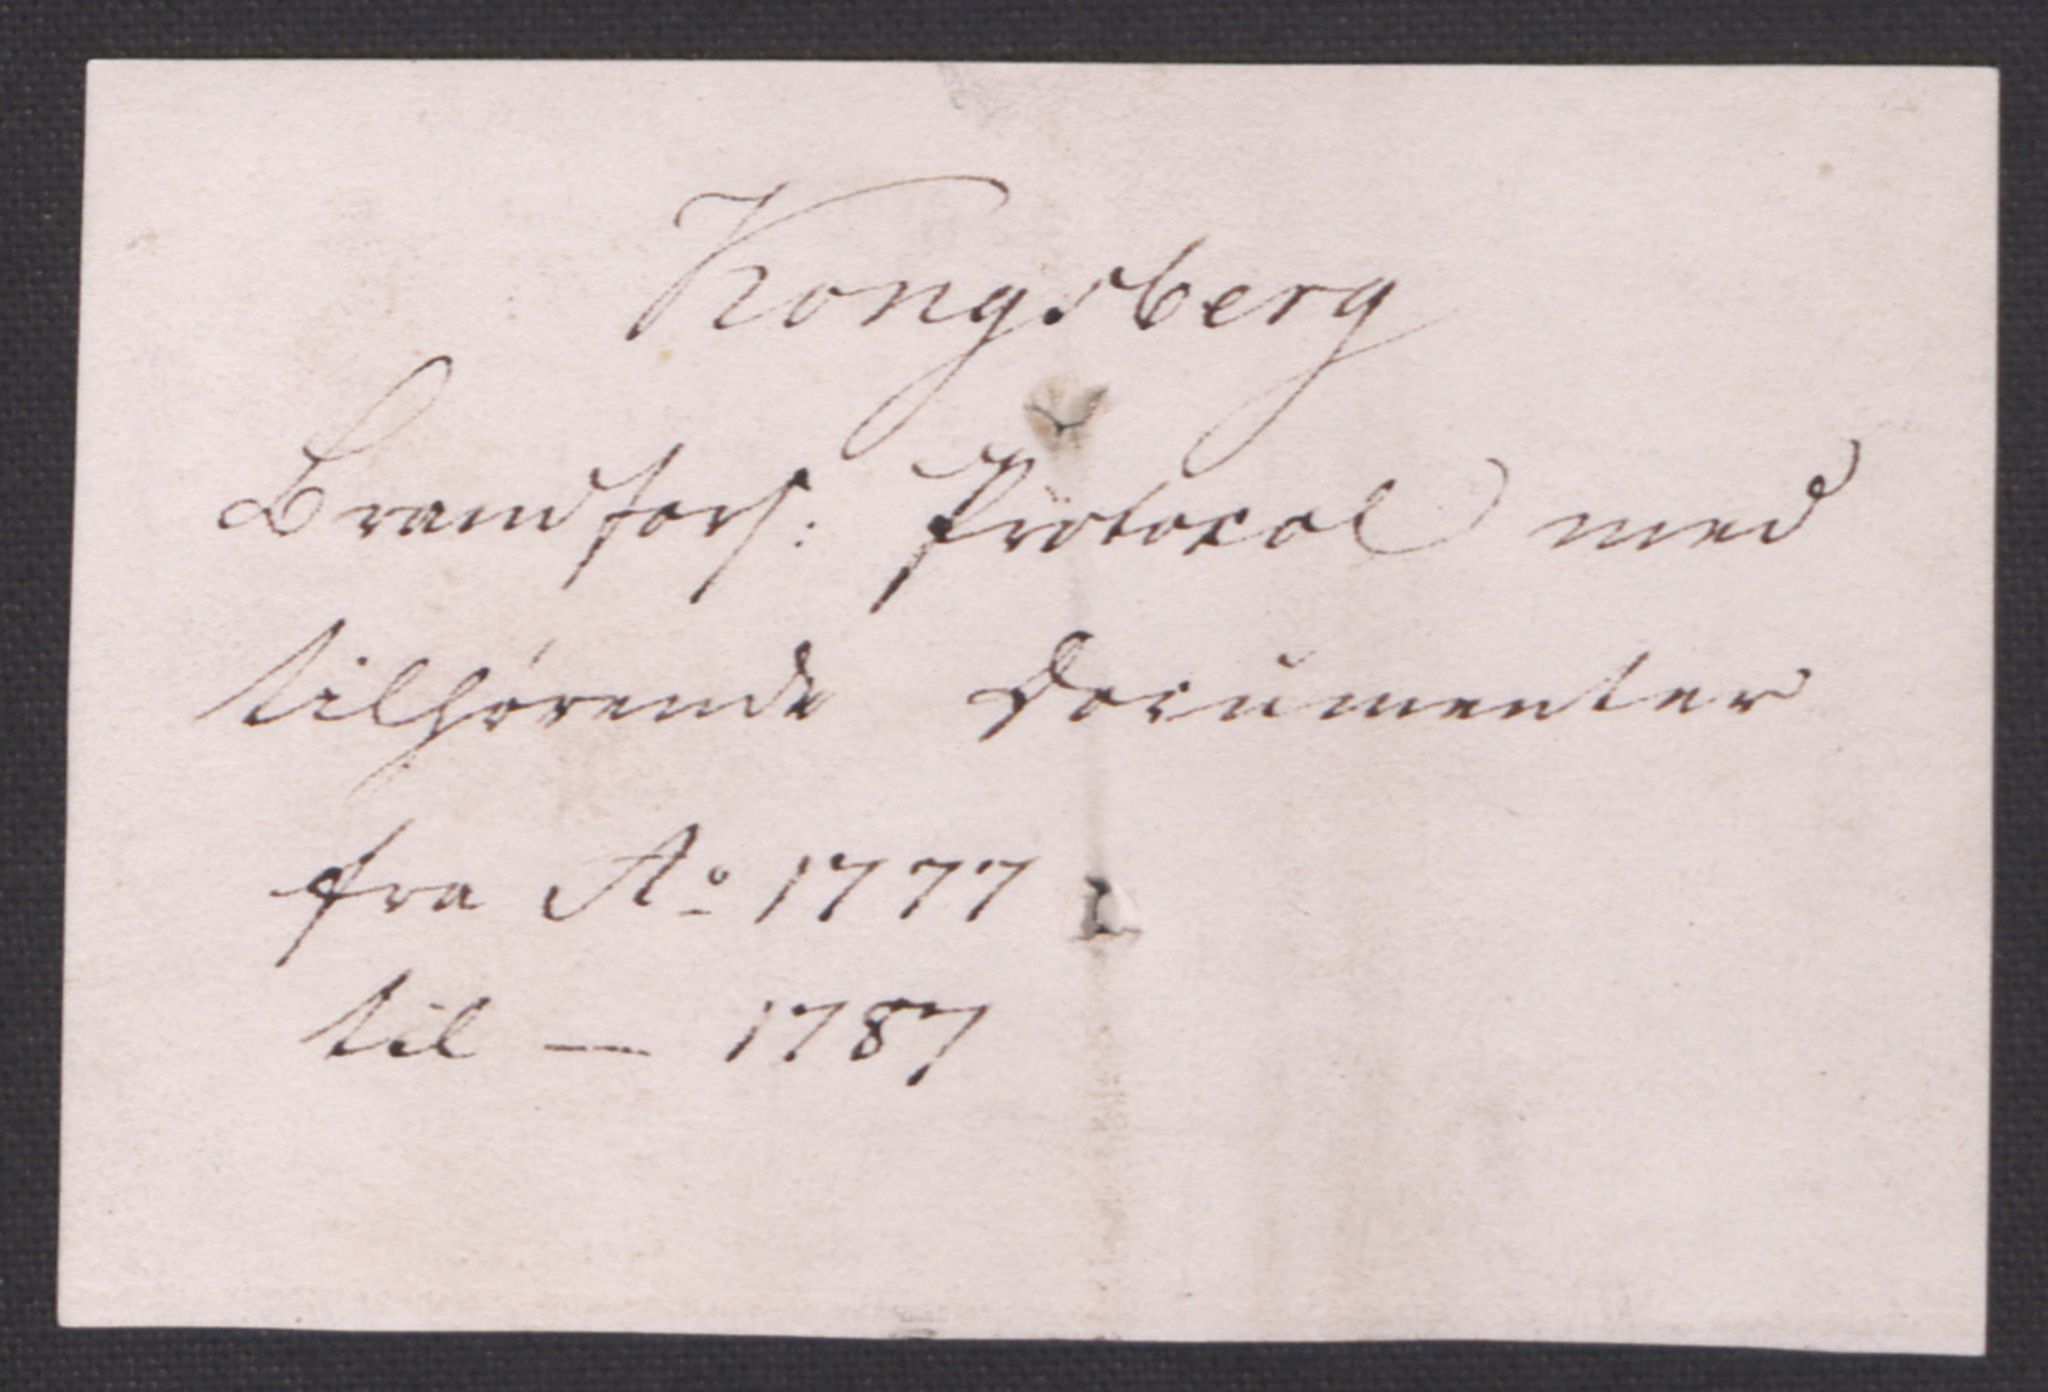 Kommersekollegiet, Brannforsikringskontoret 1767-1814, RA/EA-5458/F/Fa/L0031/0003: Kongsberg / Dokumenter, 1807-1817